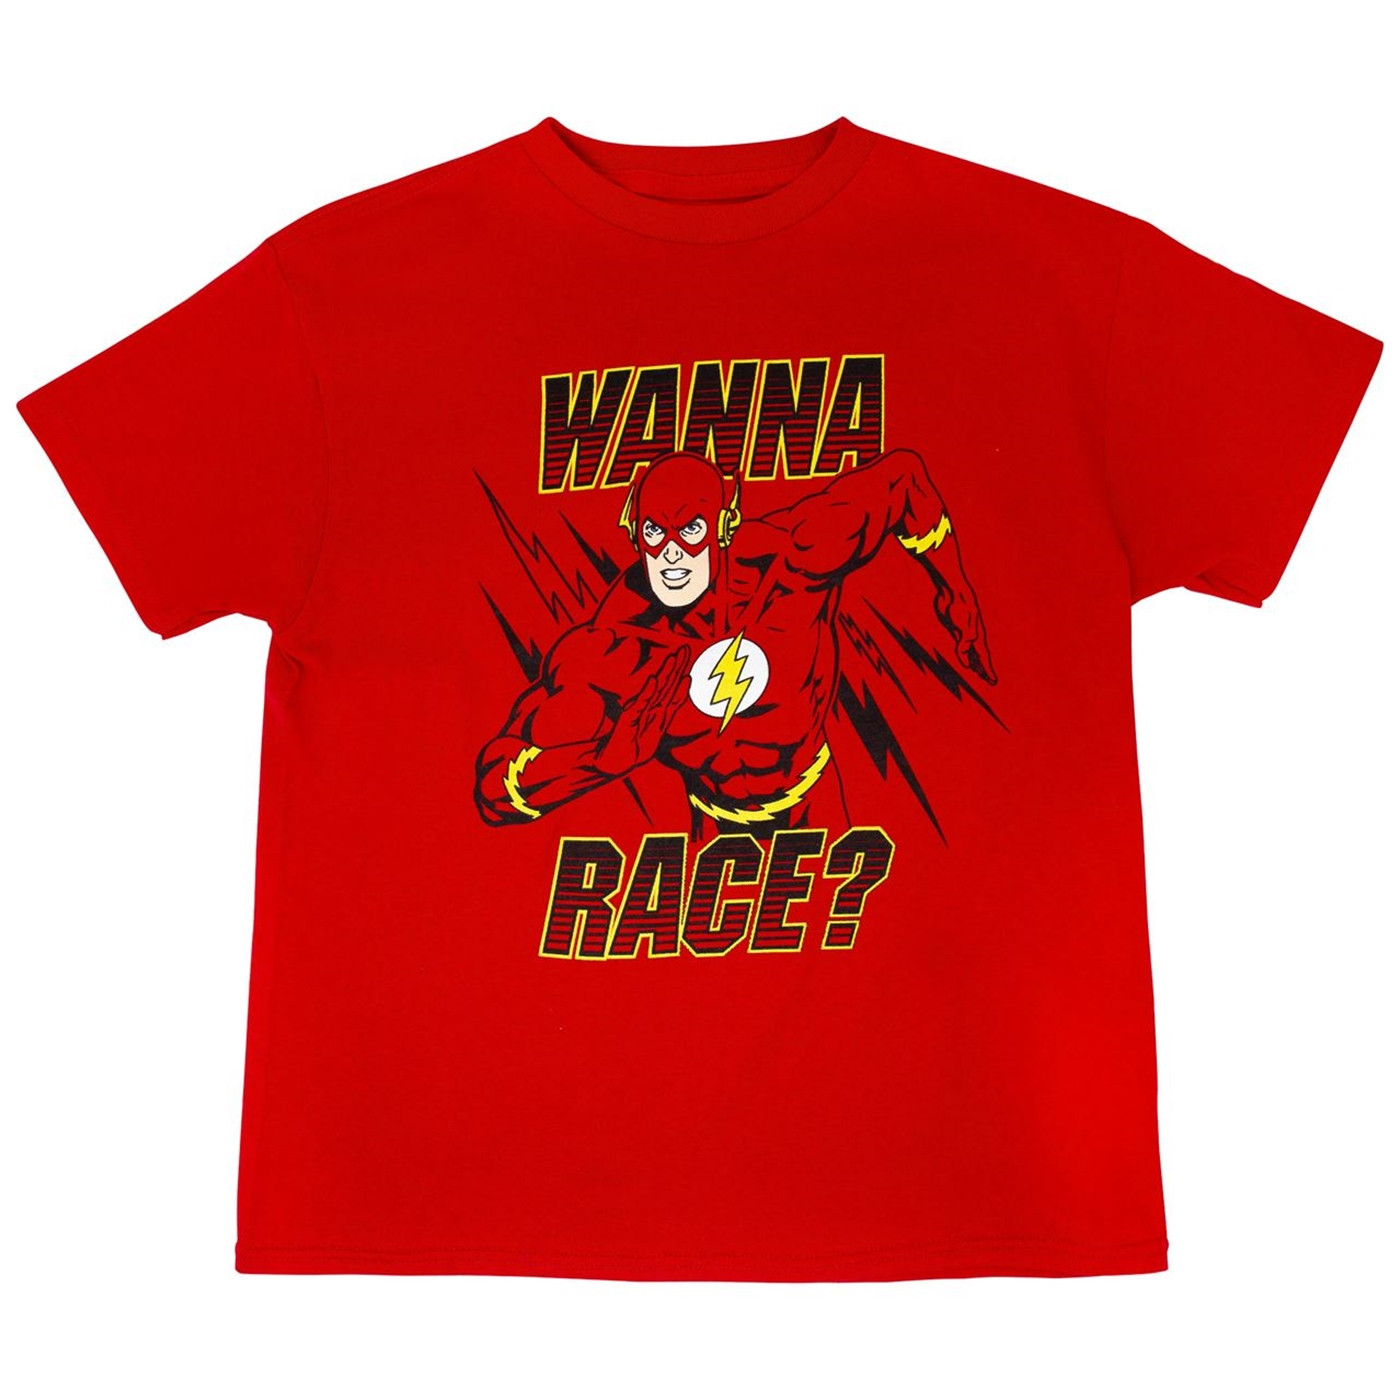 DC Comics Flash Wanna Race? T-Shirt-XLarge (14-16) - image 1 of 1